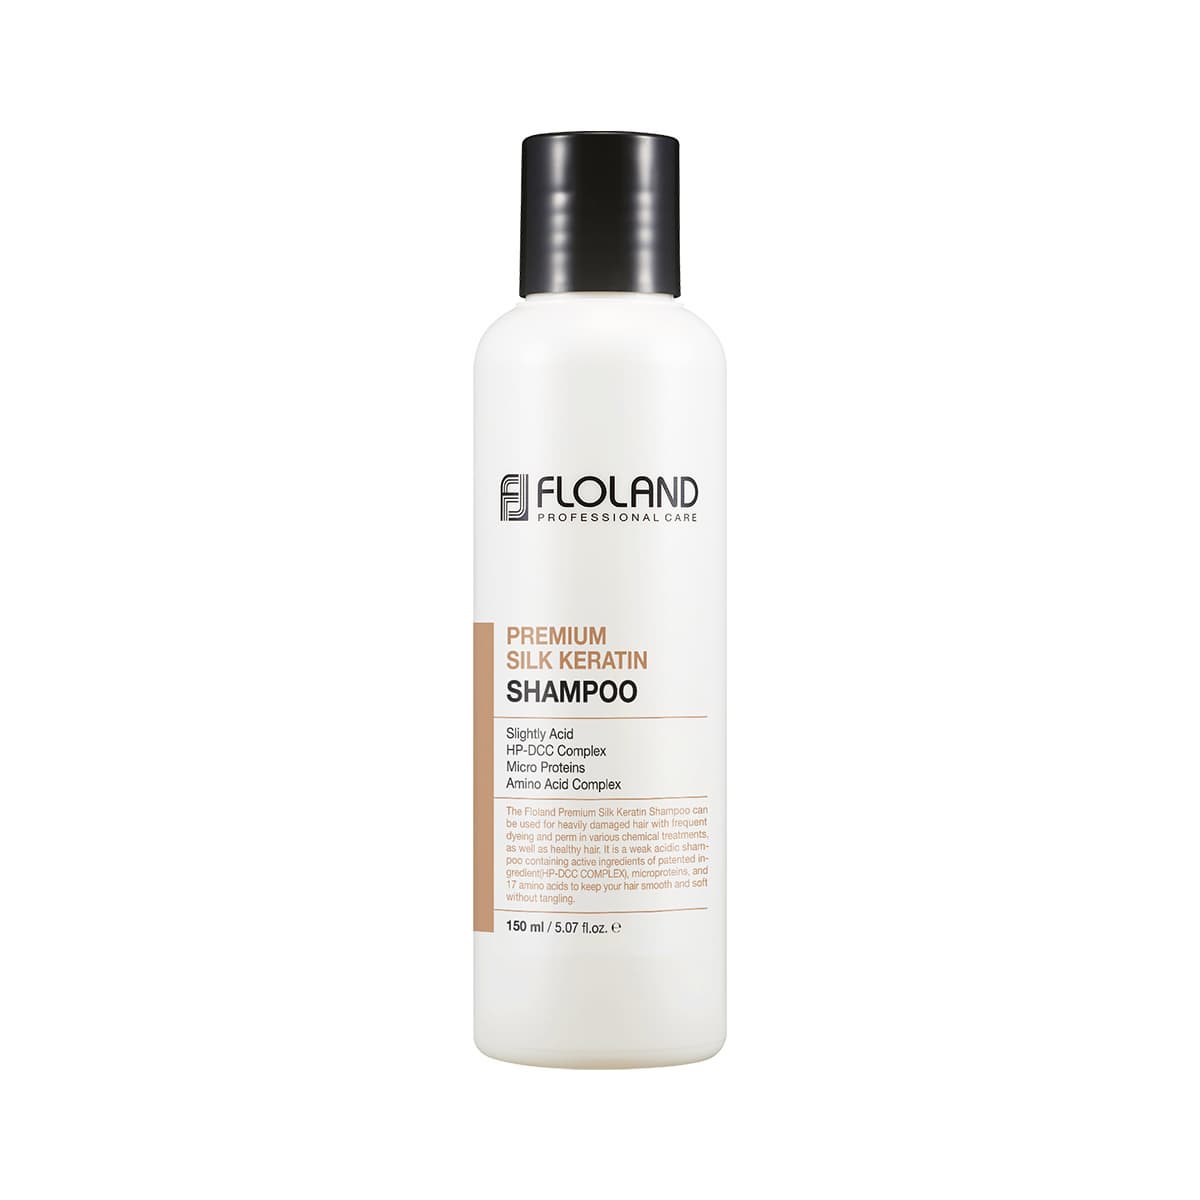 Floland Premium Silk Keratin Shampoo